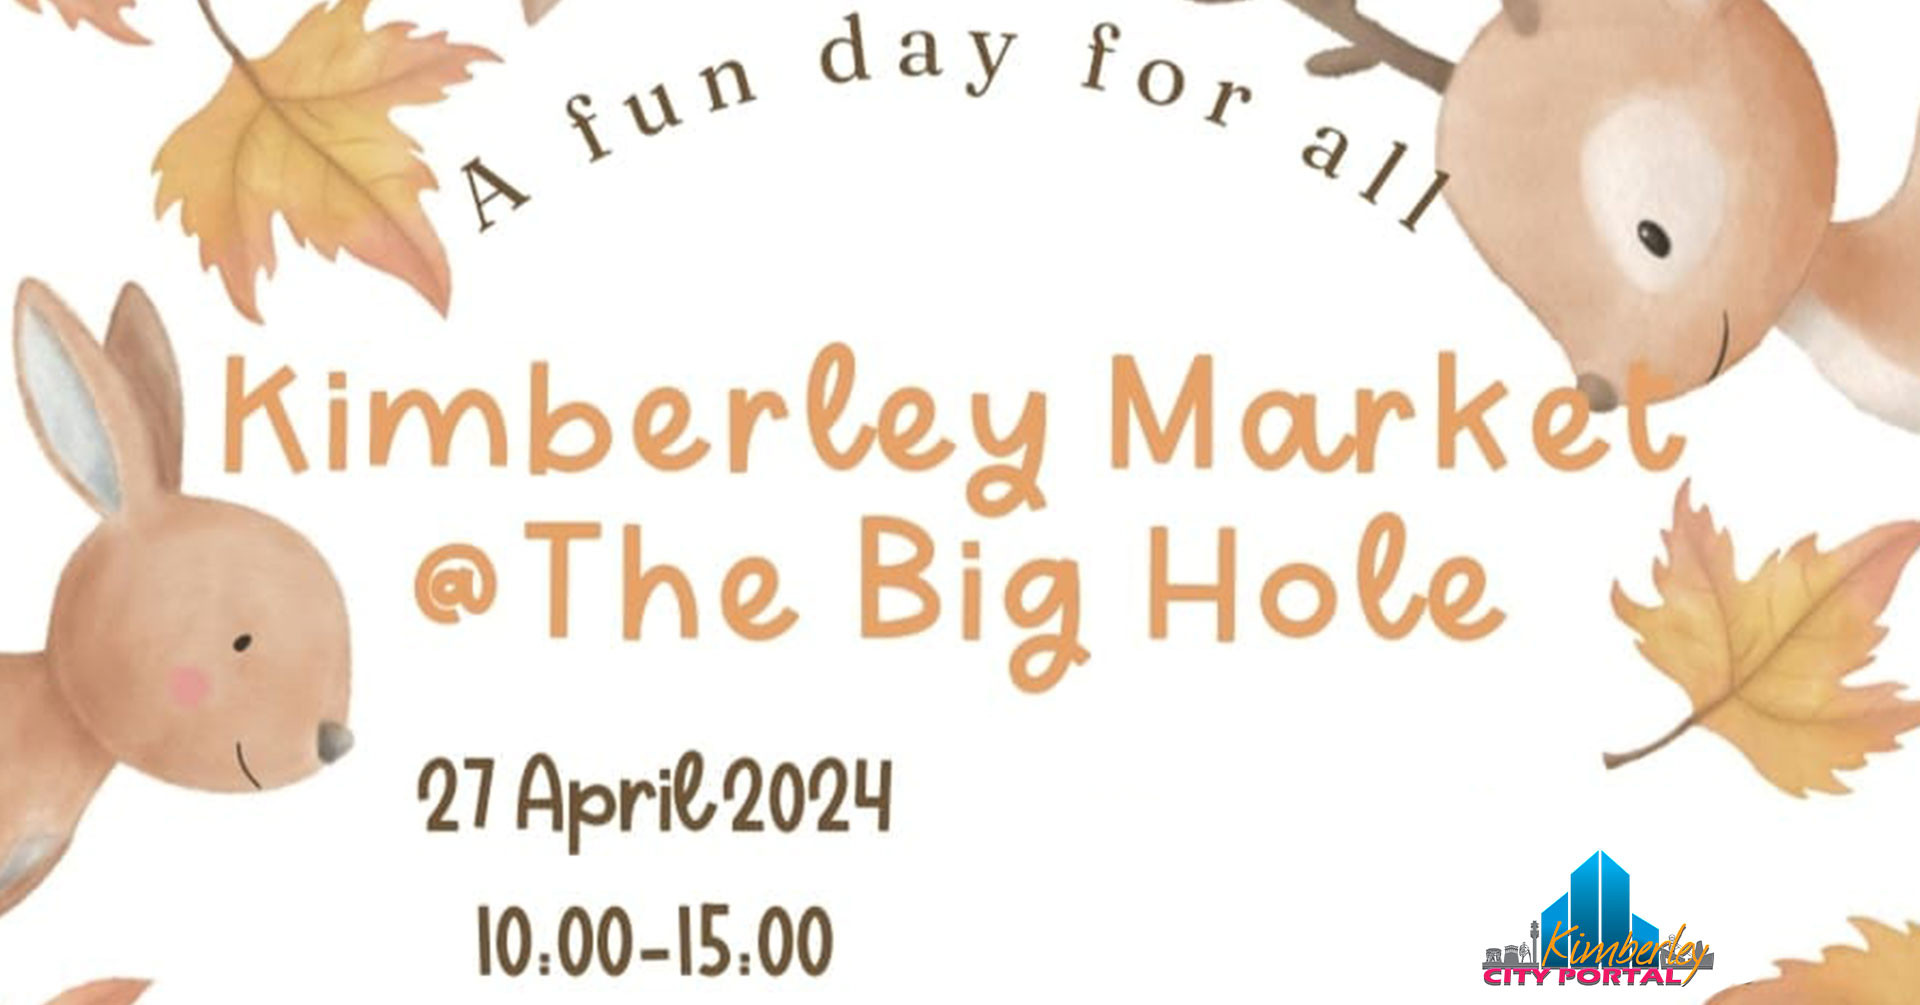 Kimberley Markets @ The Big Hole